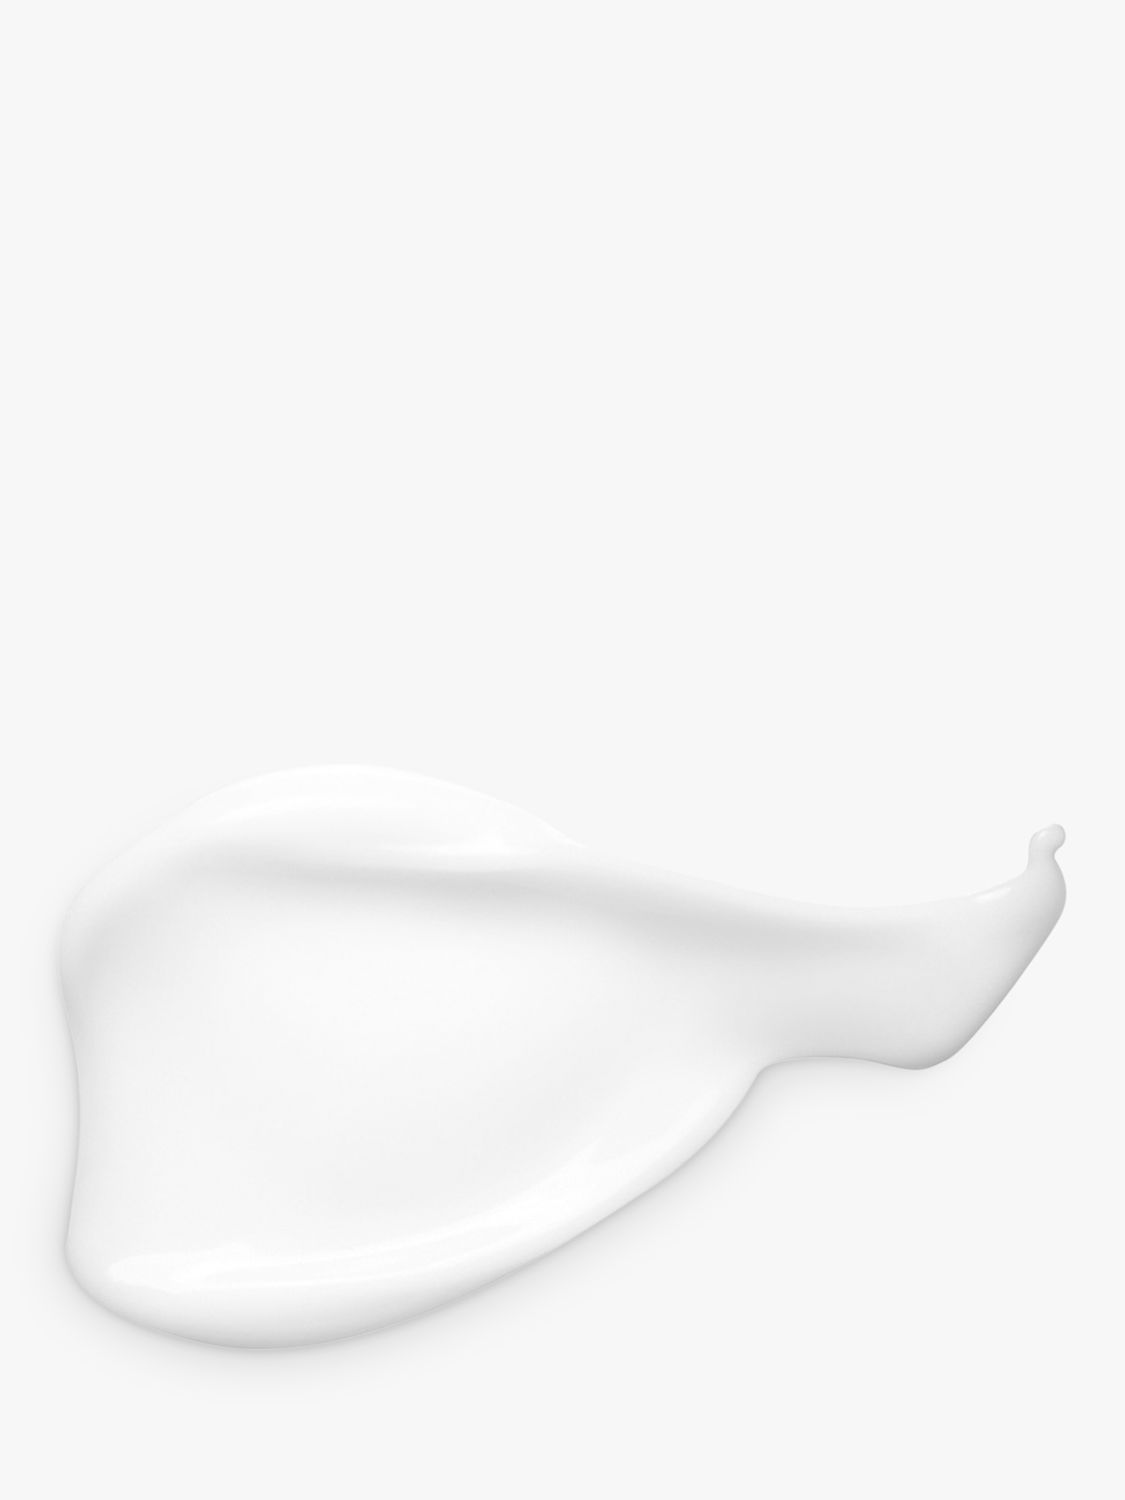 Clarins Body-Smoothing Moisture Milk, 400ml 2